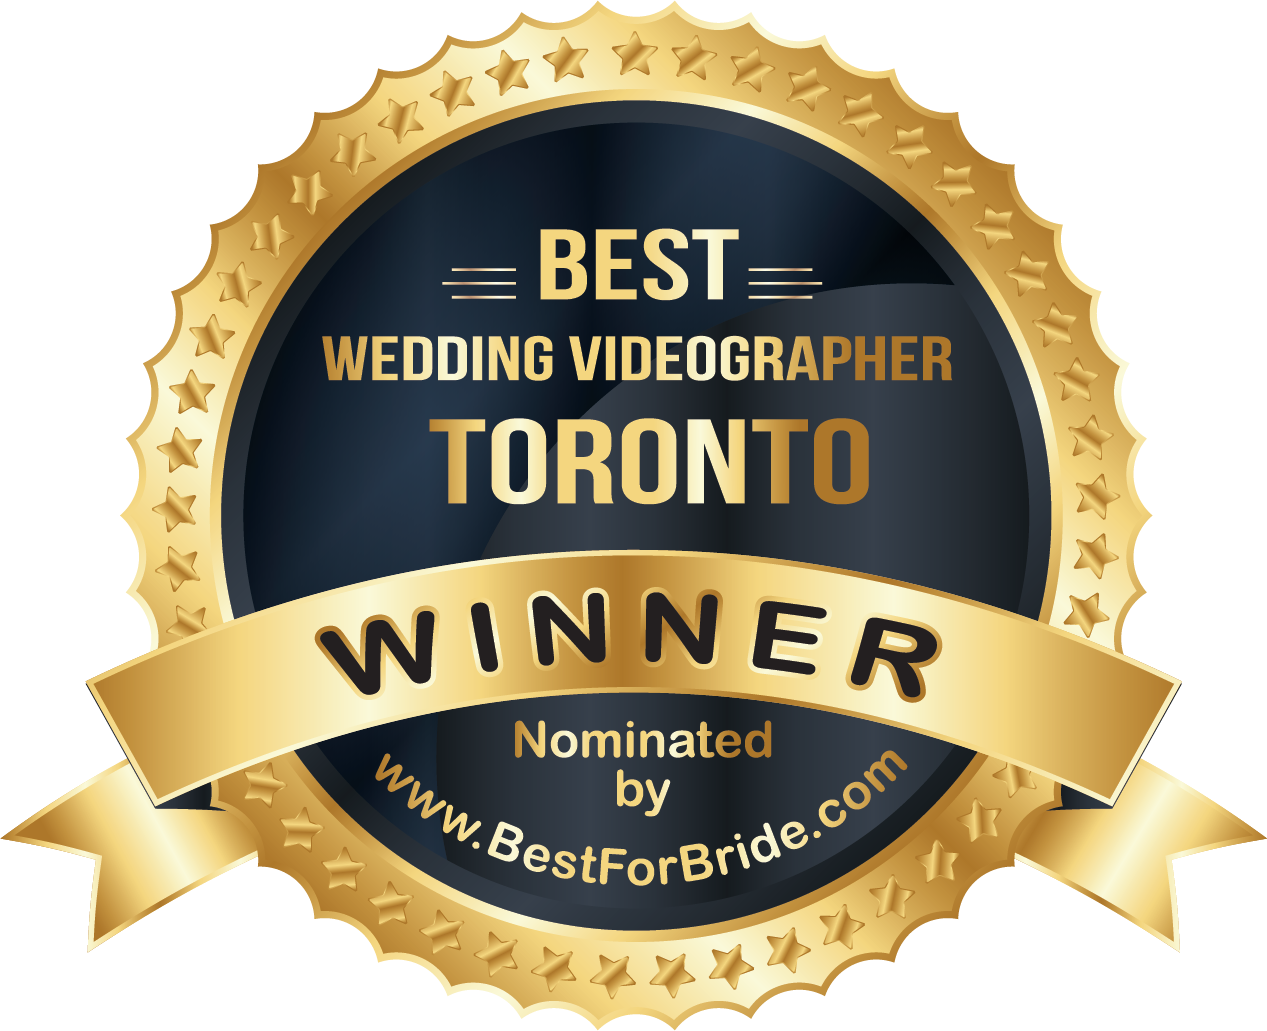 Best Wedding Videographer Toronto by Best for Bride